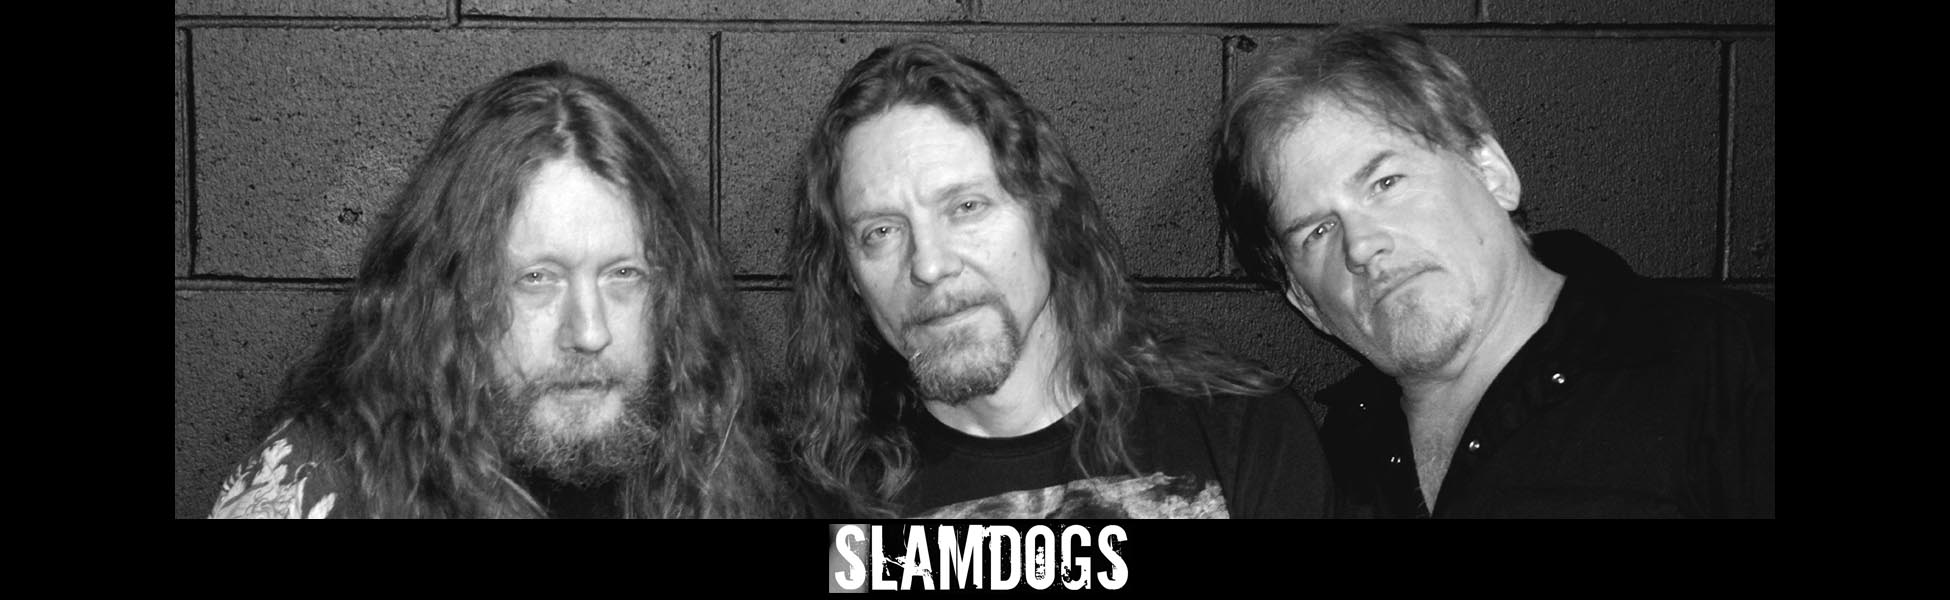 Slamdogs band